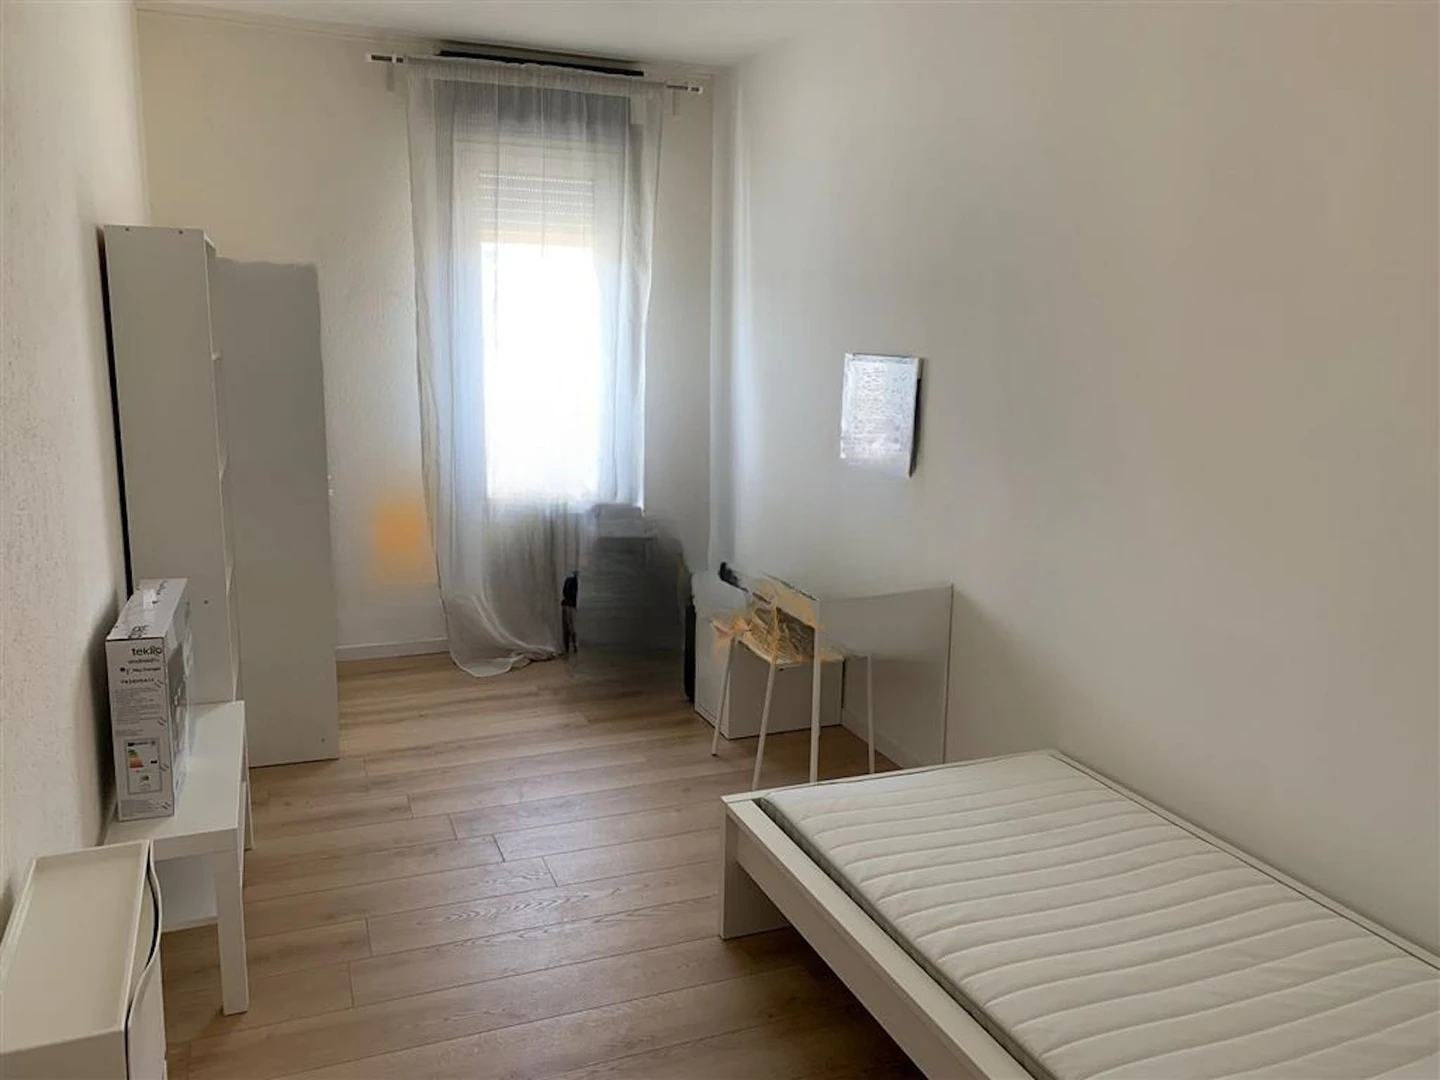 Cheap private room in Venezia